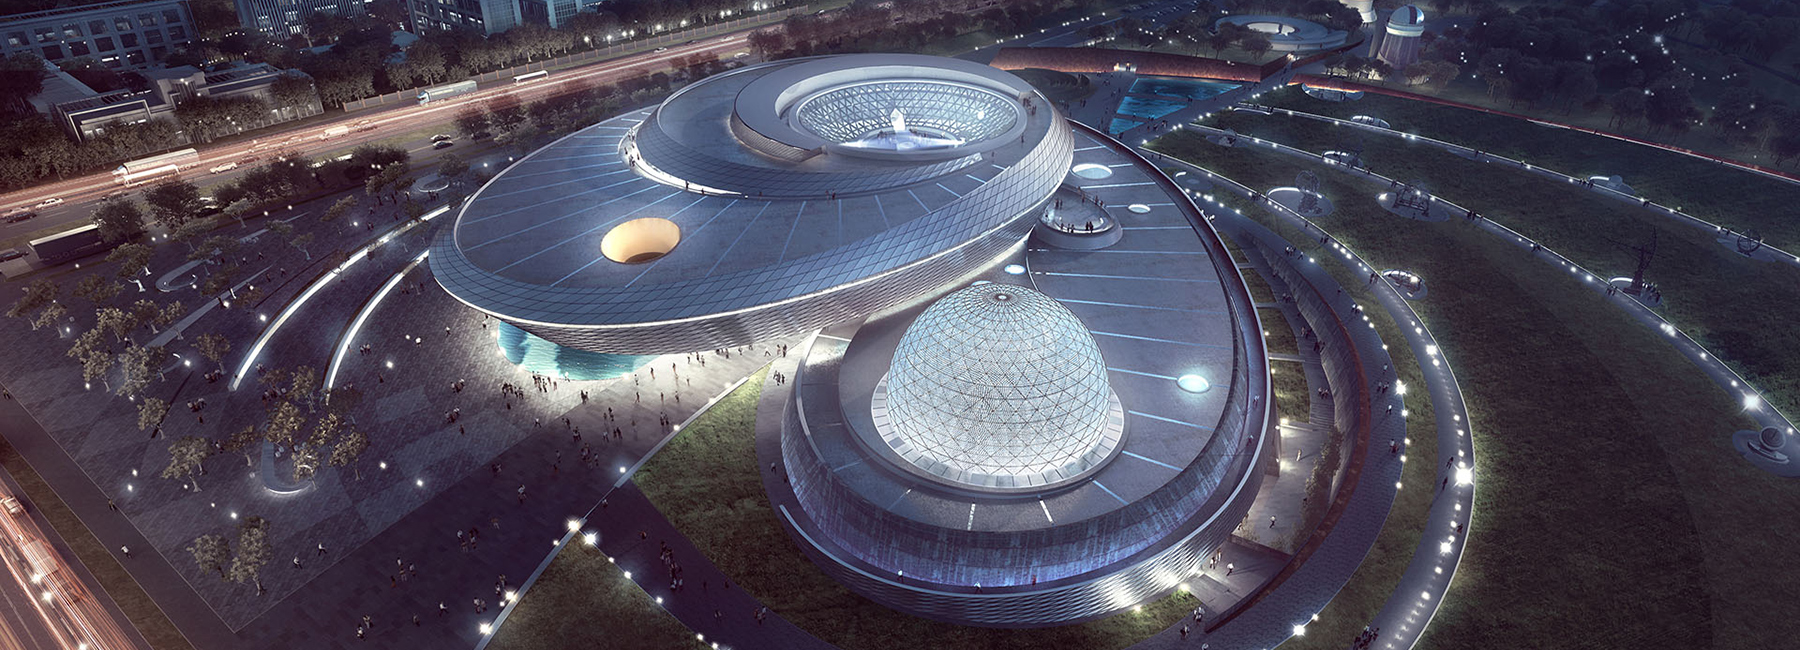 ennead architects breaks ground on spiraling shanghai planetarium